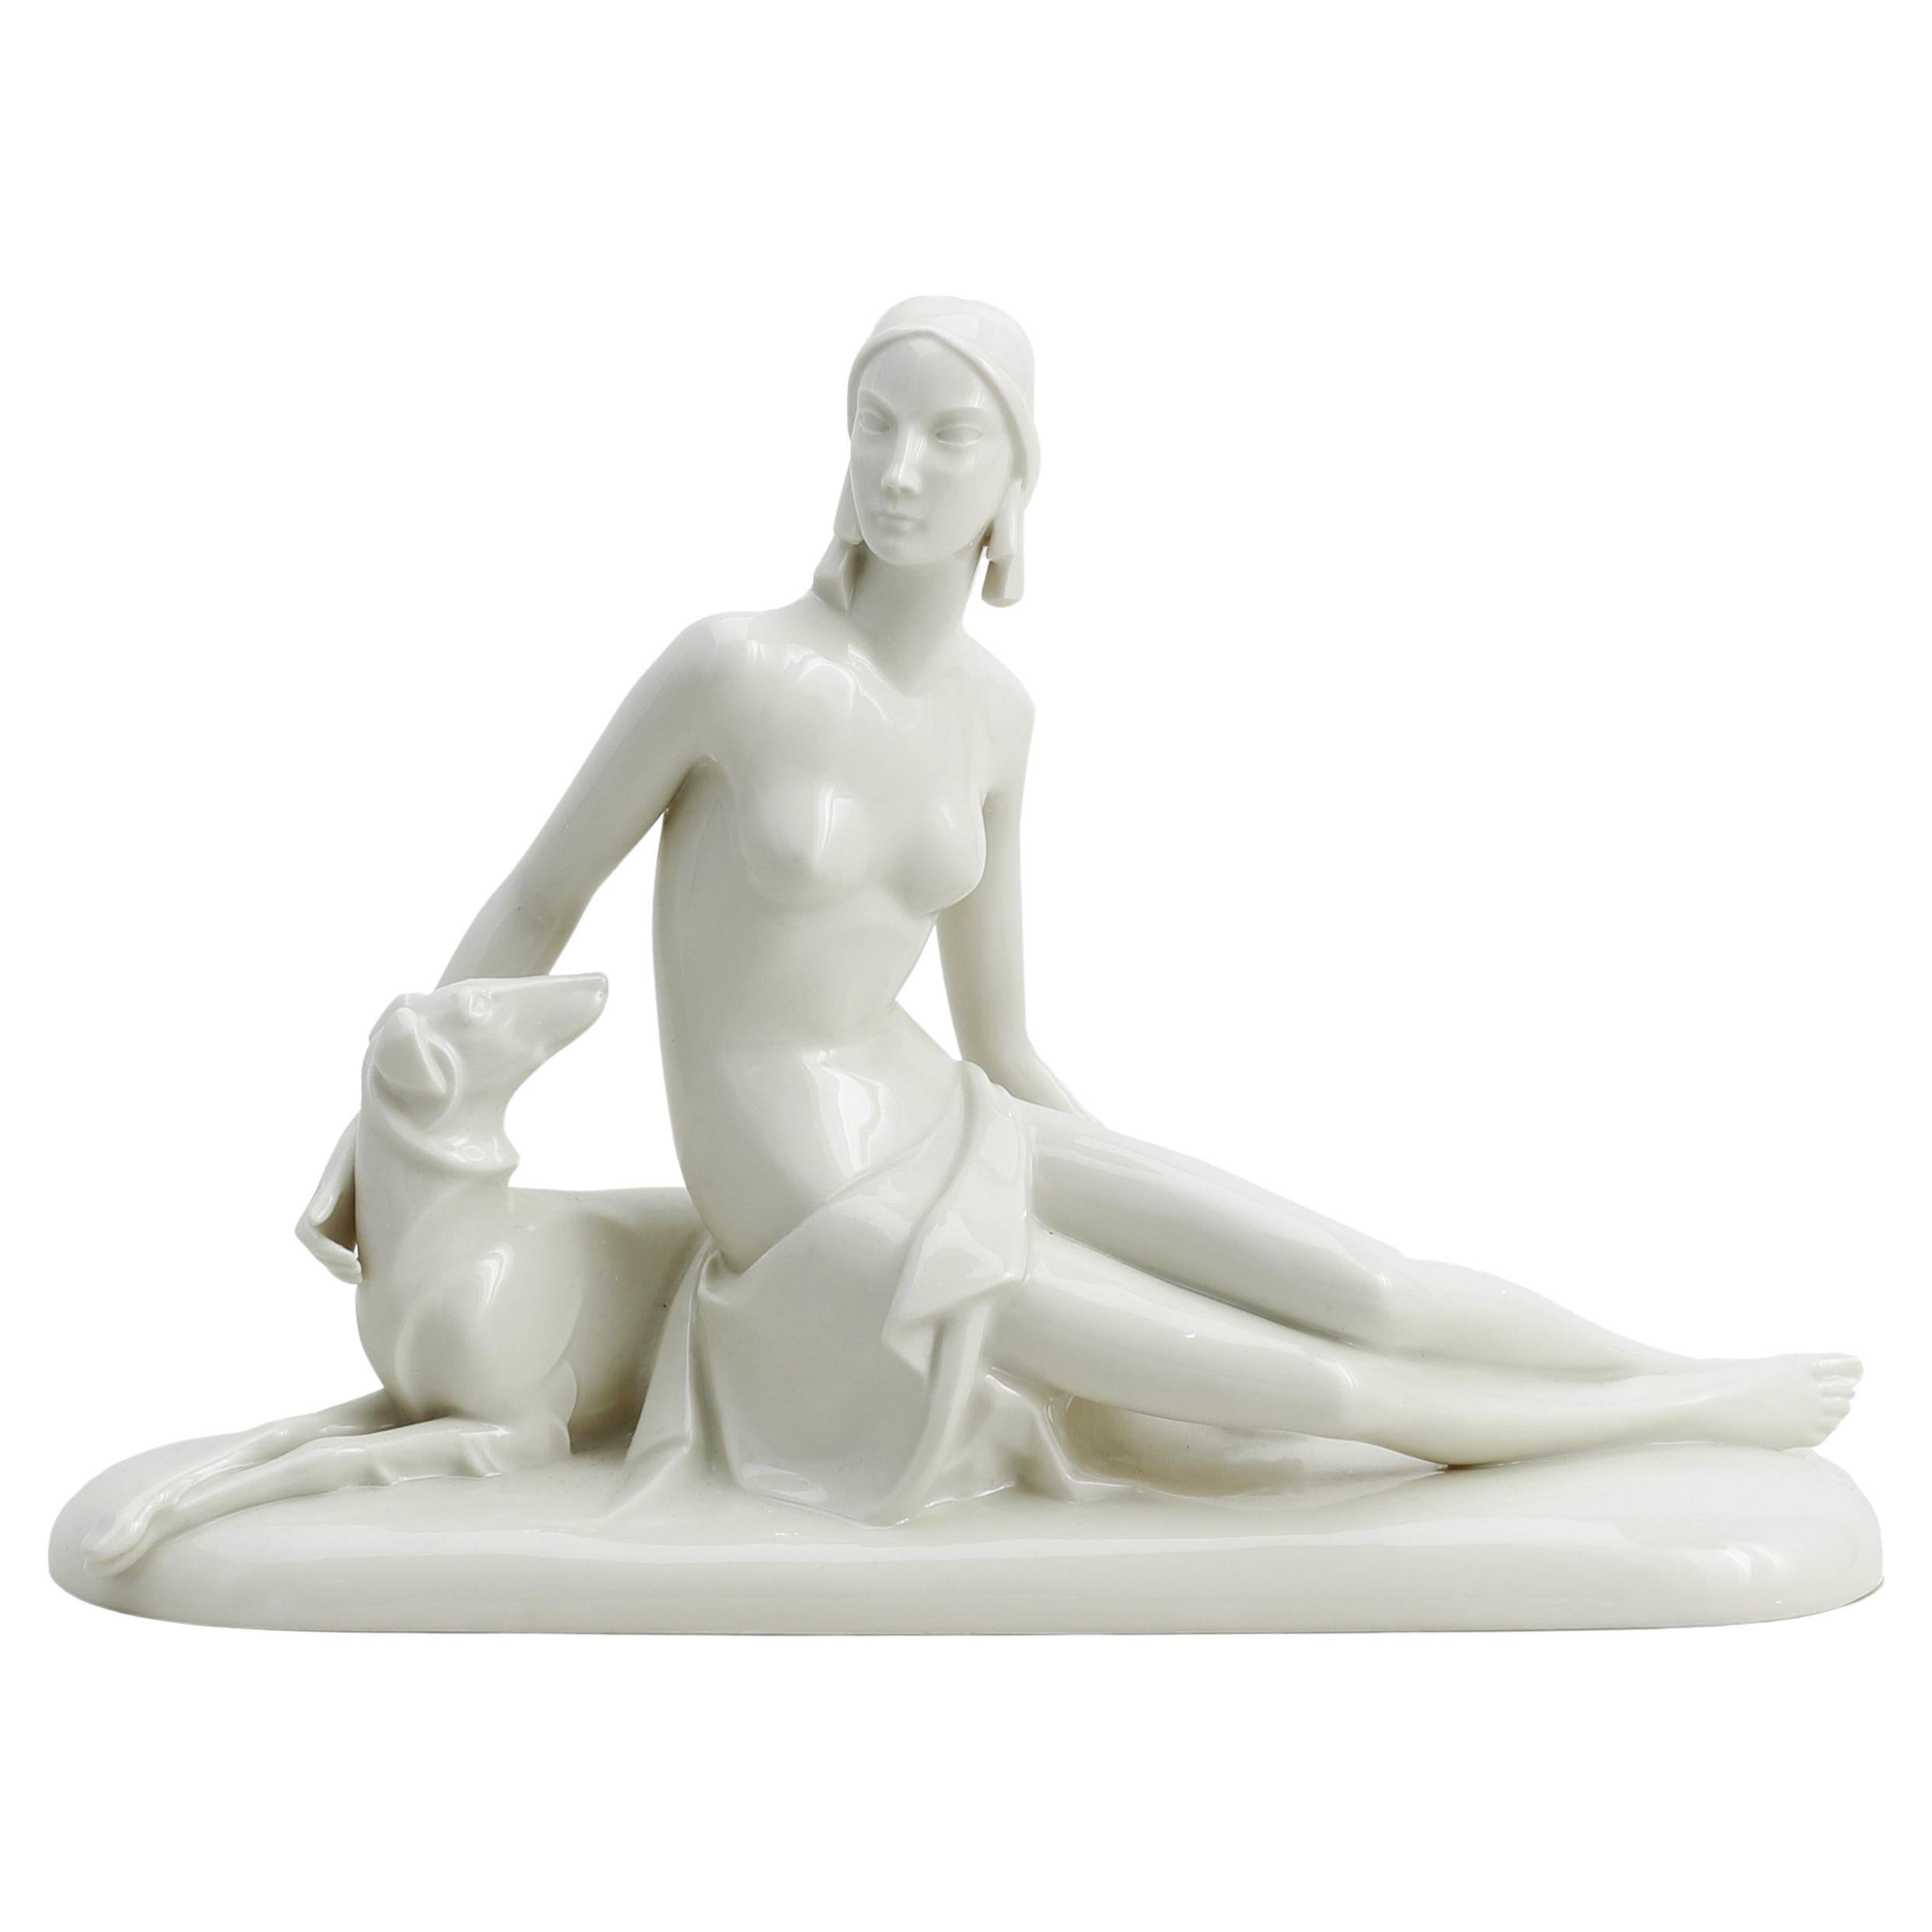 Art Deco Sculpture by Gerhard Schliepstein for Rosenthal, Named "Diana"